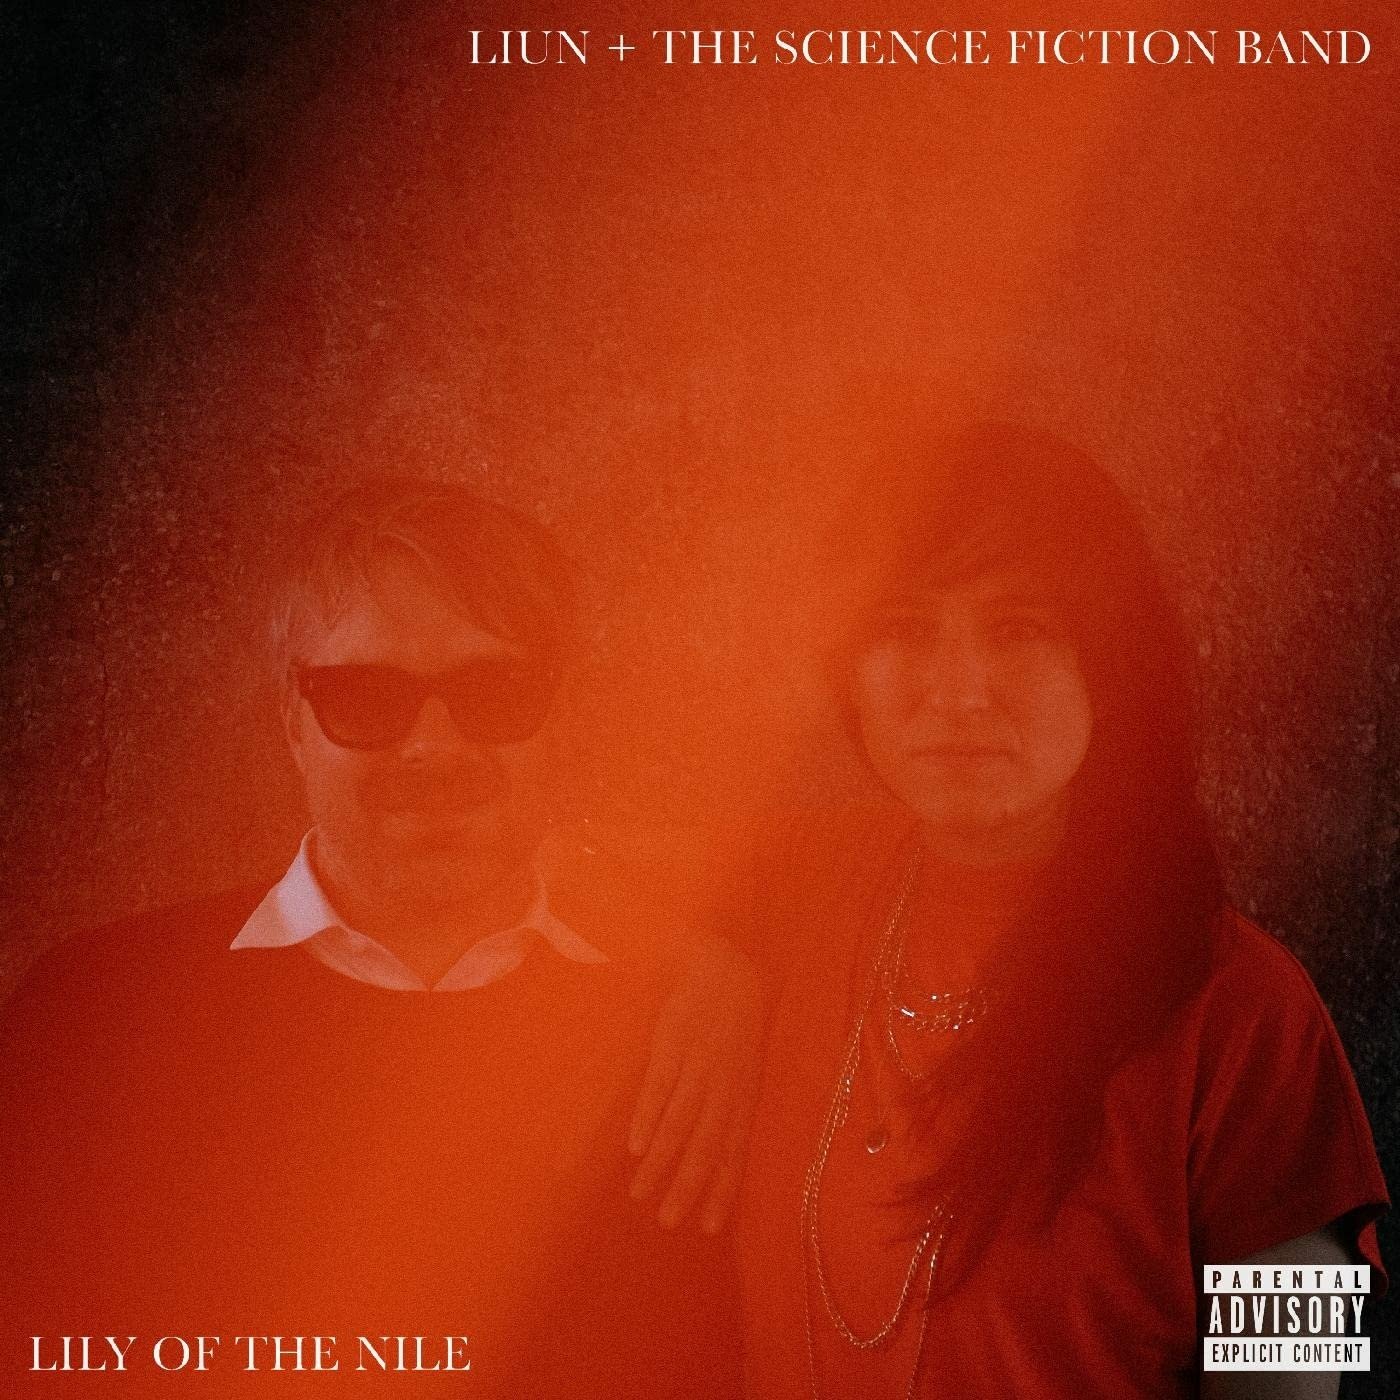 CD Shop - LIUN + THE SCIENCE FICTION BAND LILY O